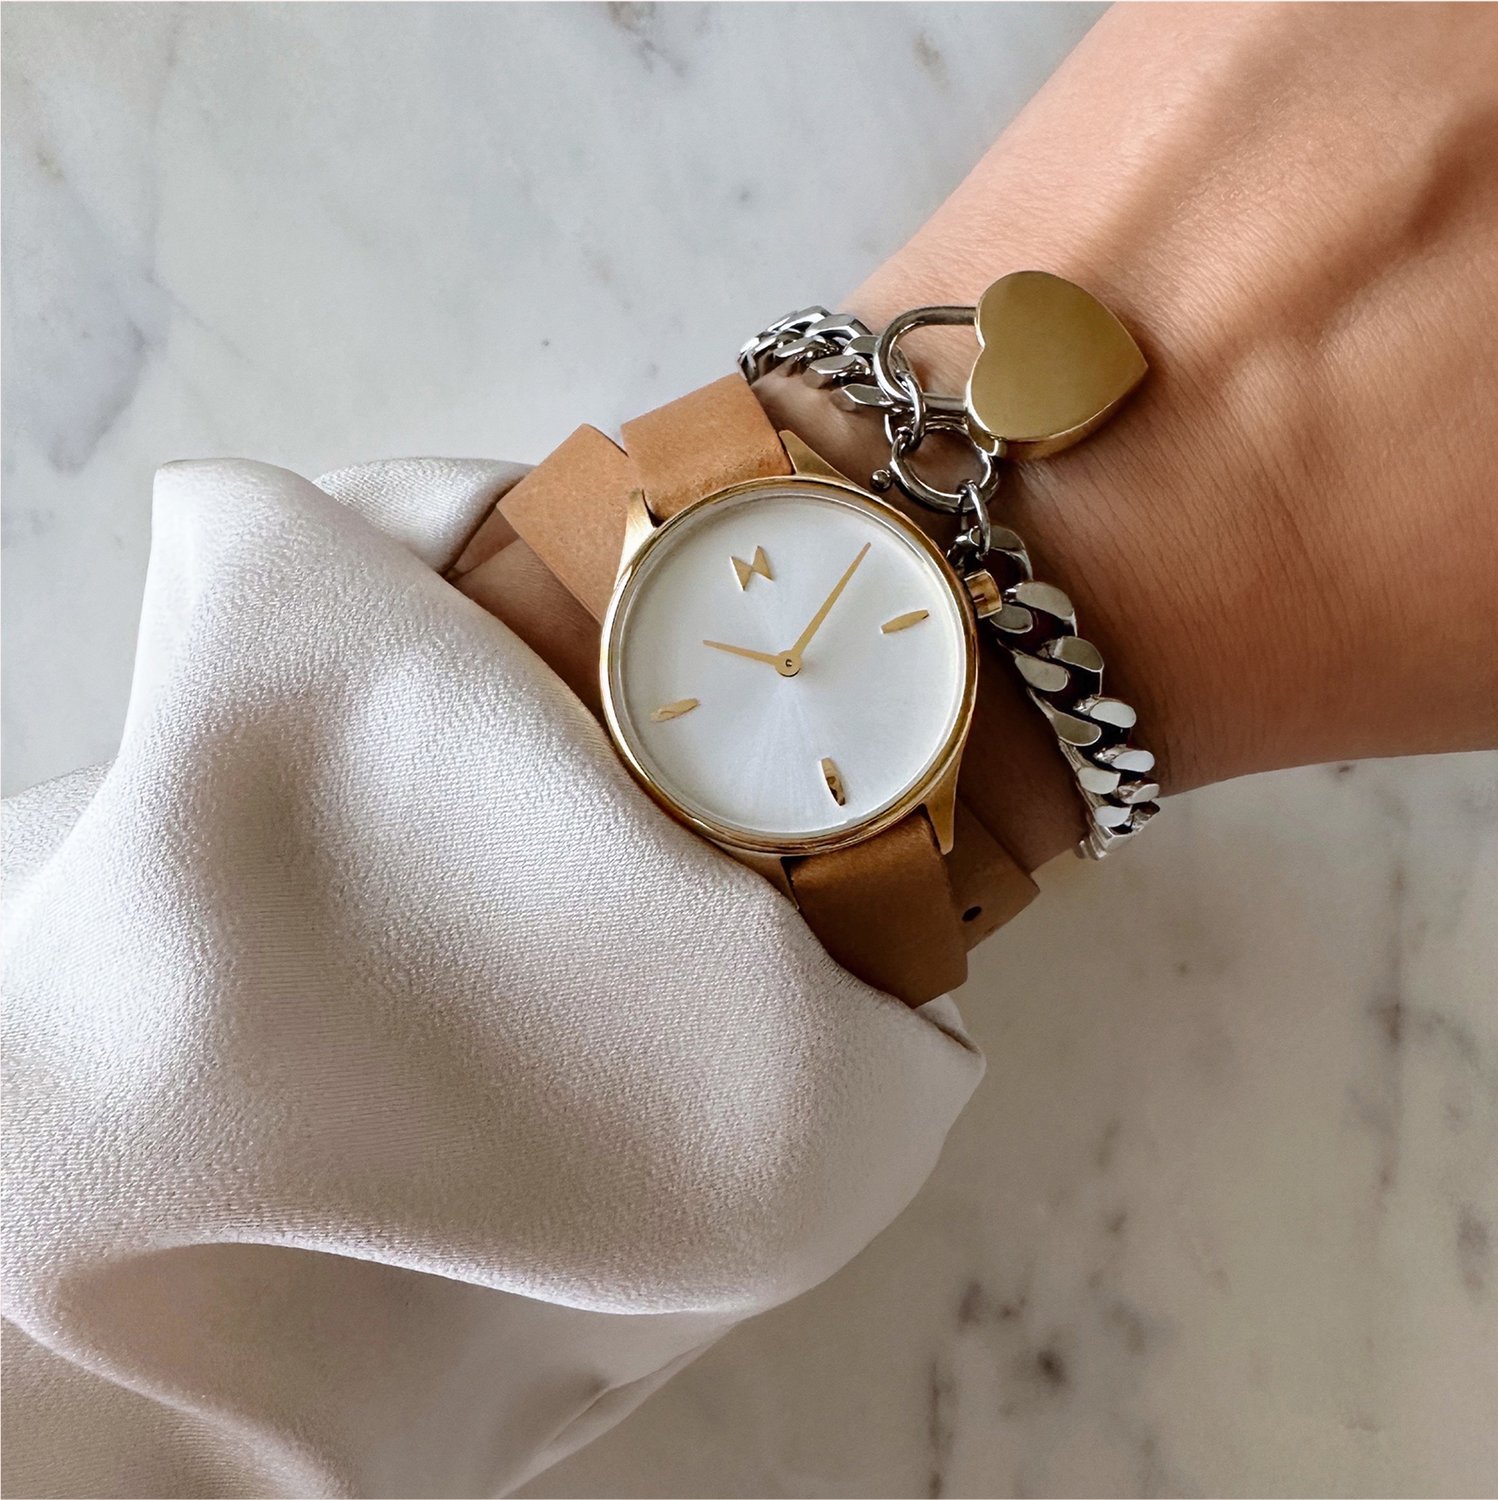 MVMT Reina leather watch and heartlock bracelet on wrist